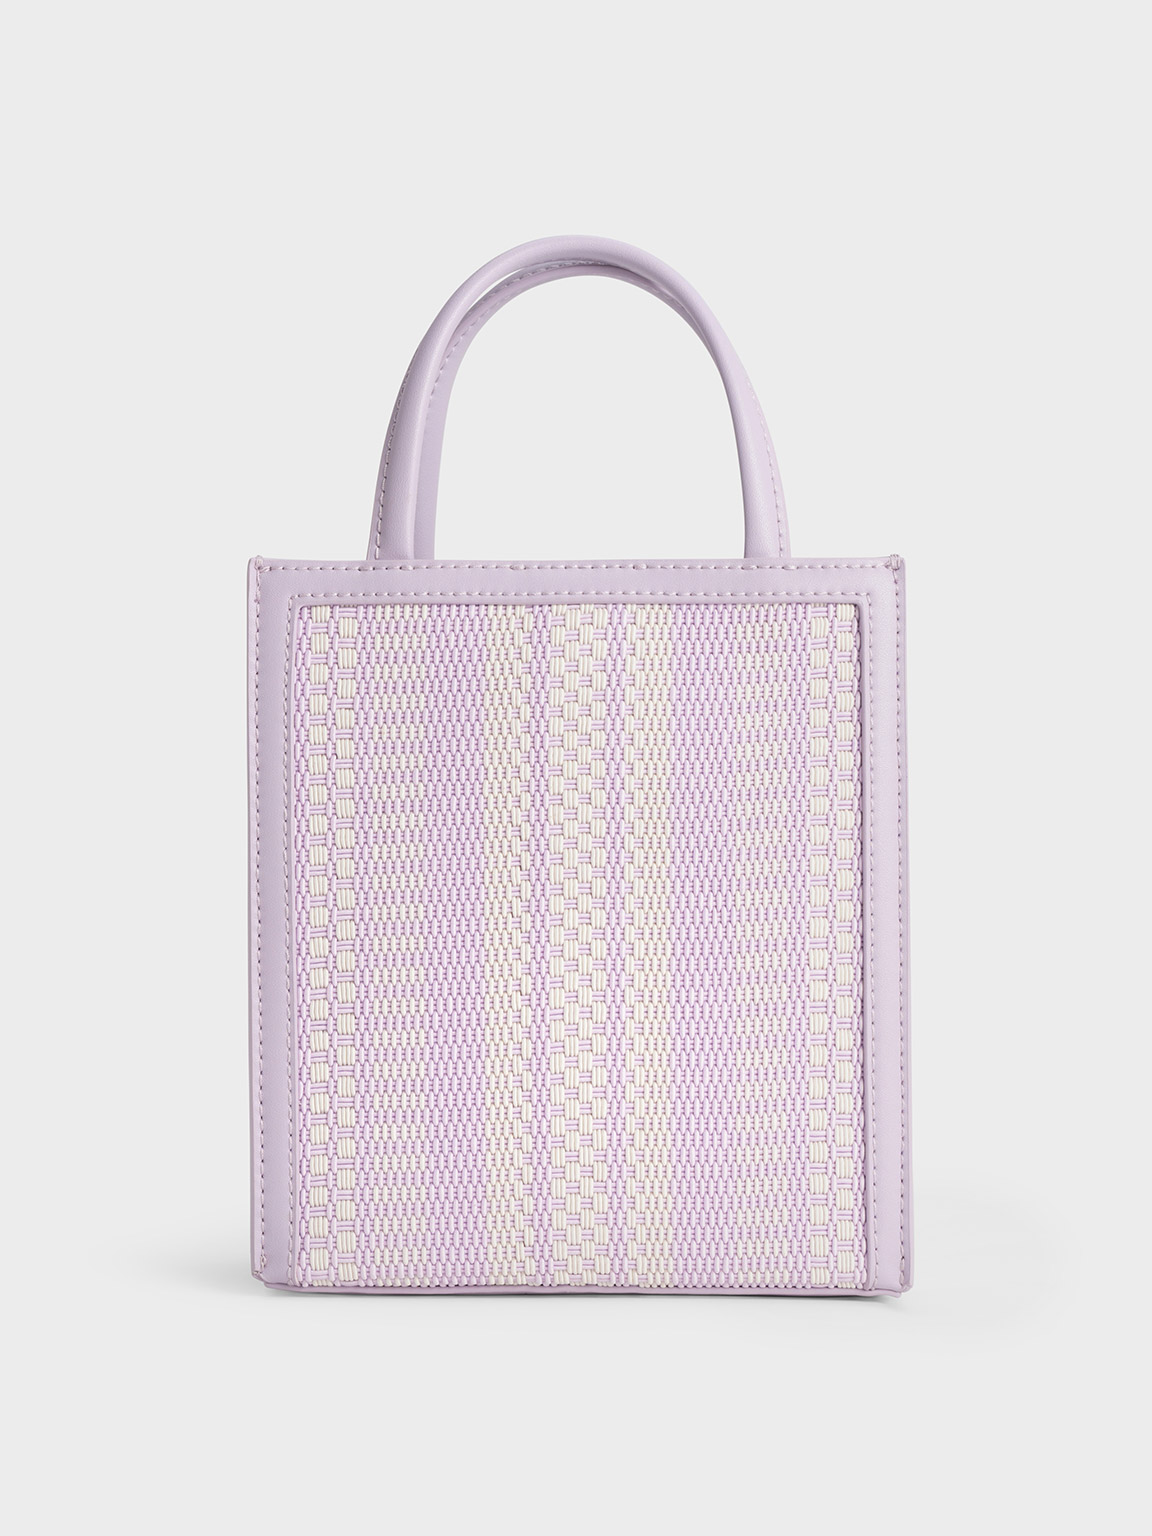 Charles & Keith - Women's Charlot Bag, Purple, S